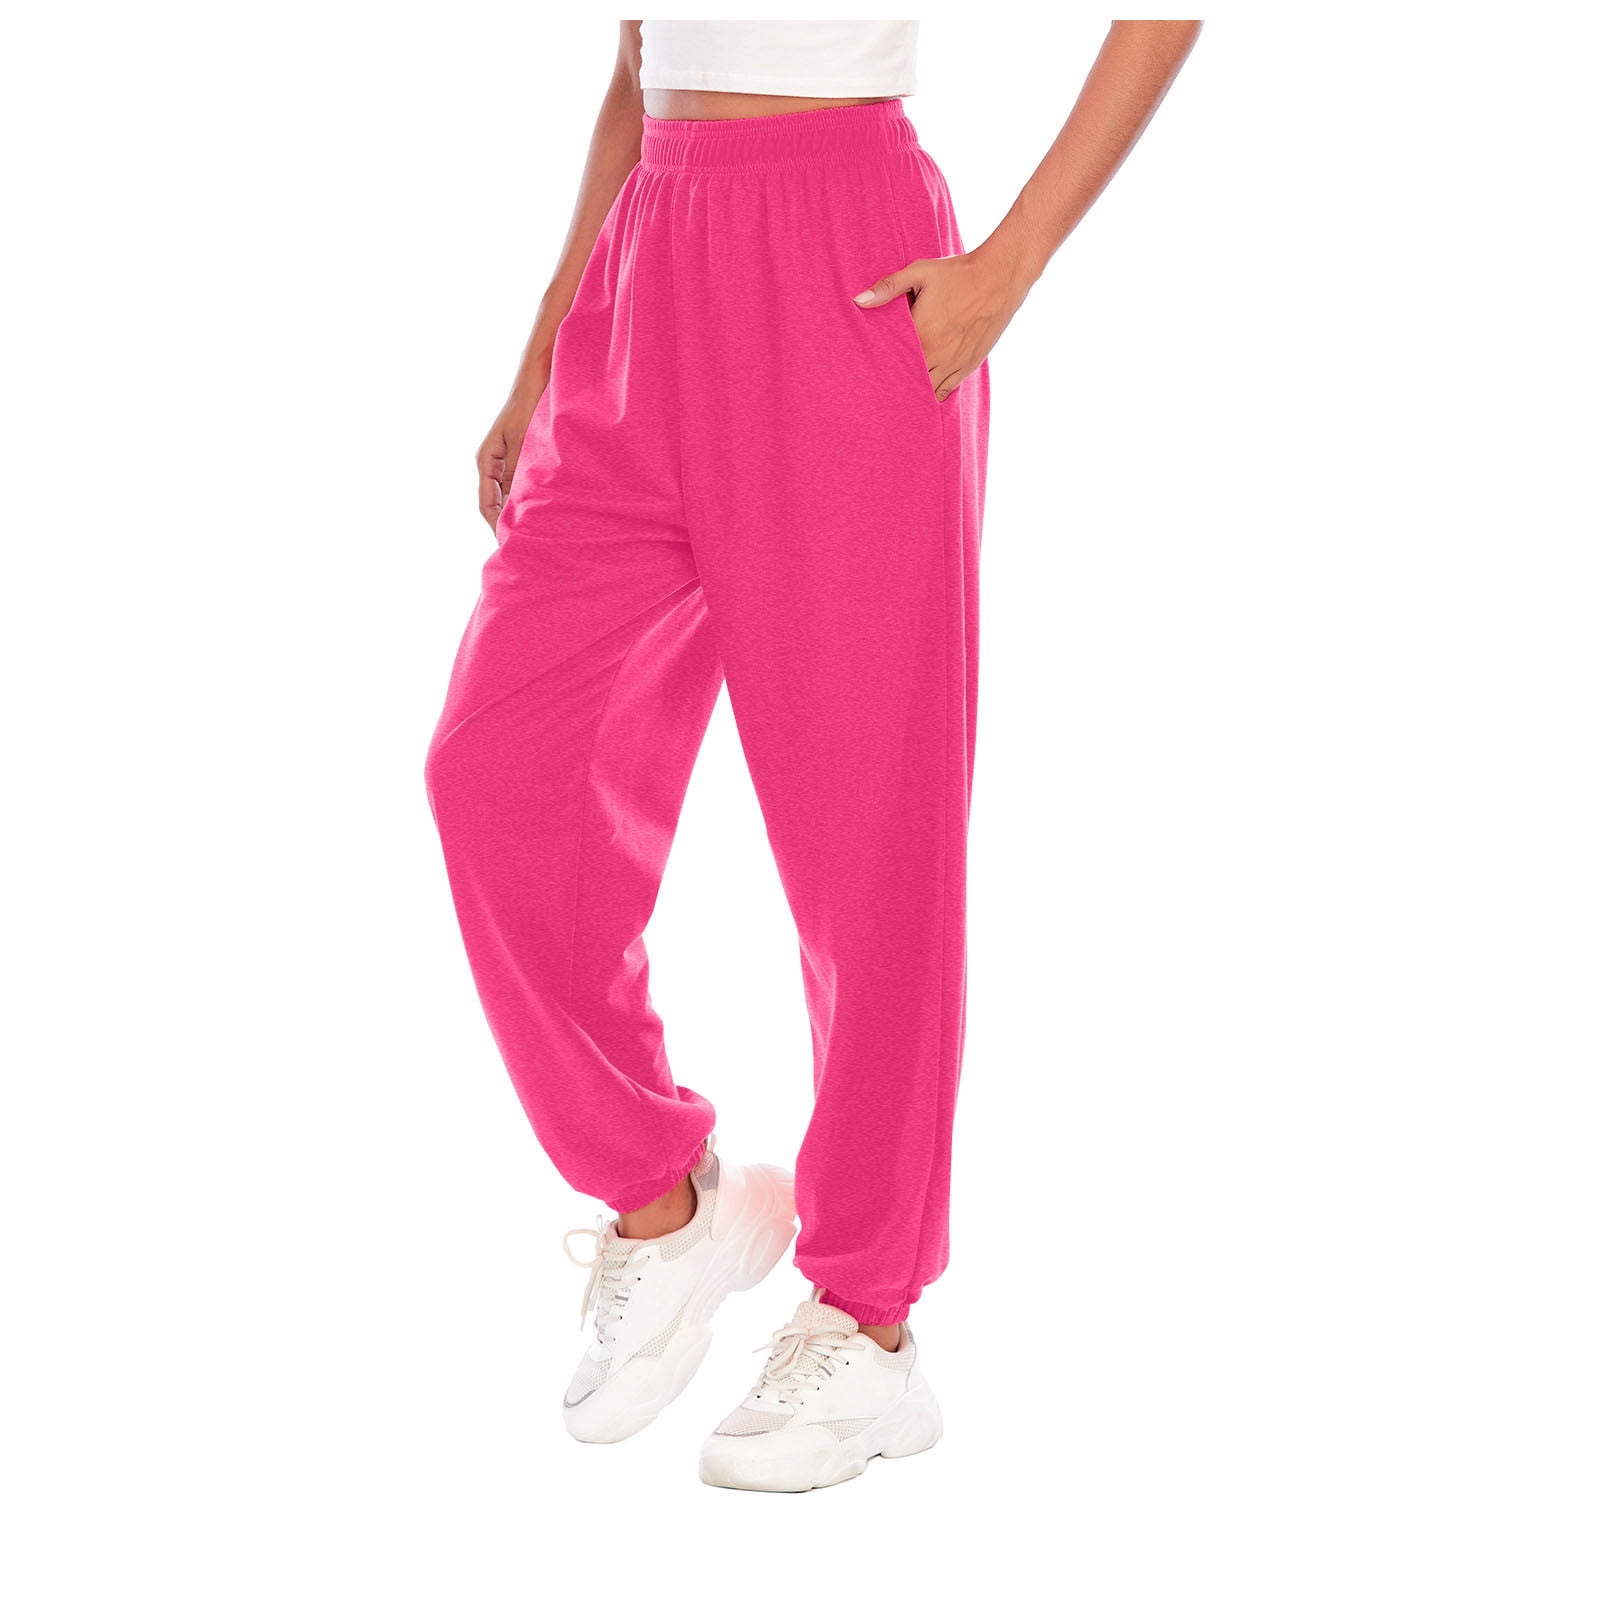 Puntoco Womens Plus Size Clearance,Women Sports Pants Trousers Jogging  Sweatpants Jogger Pants Hot Pink